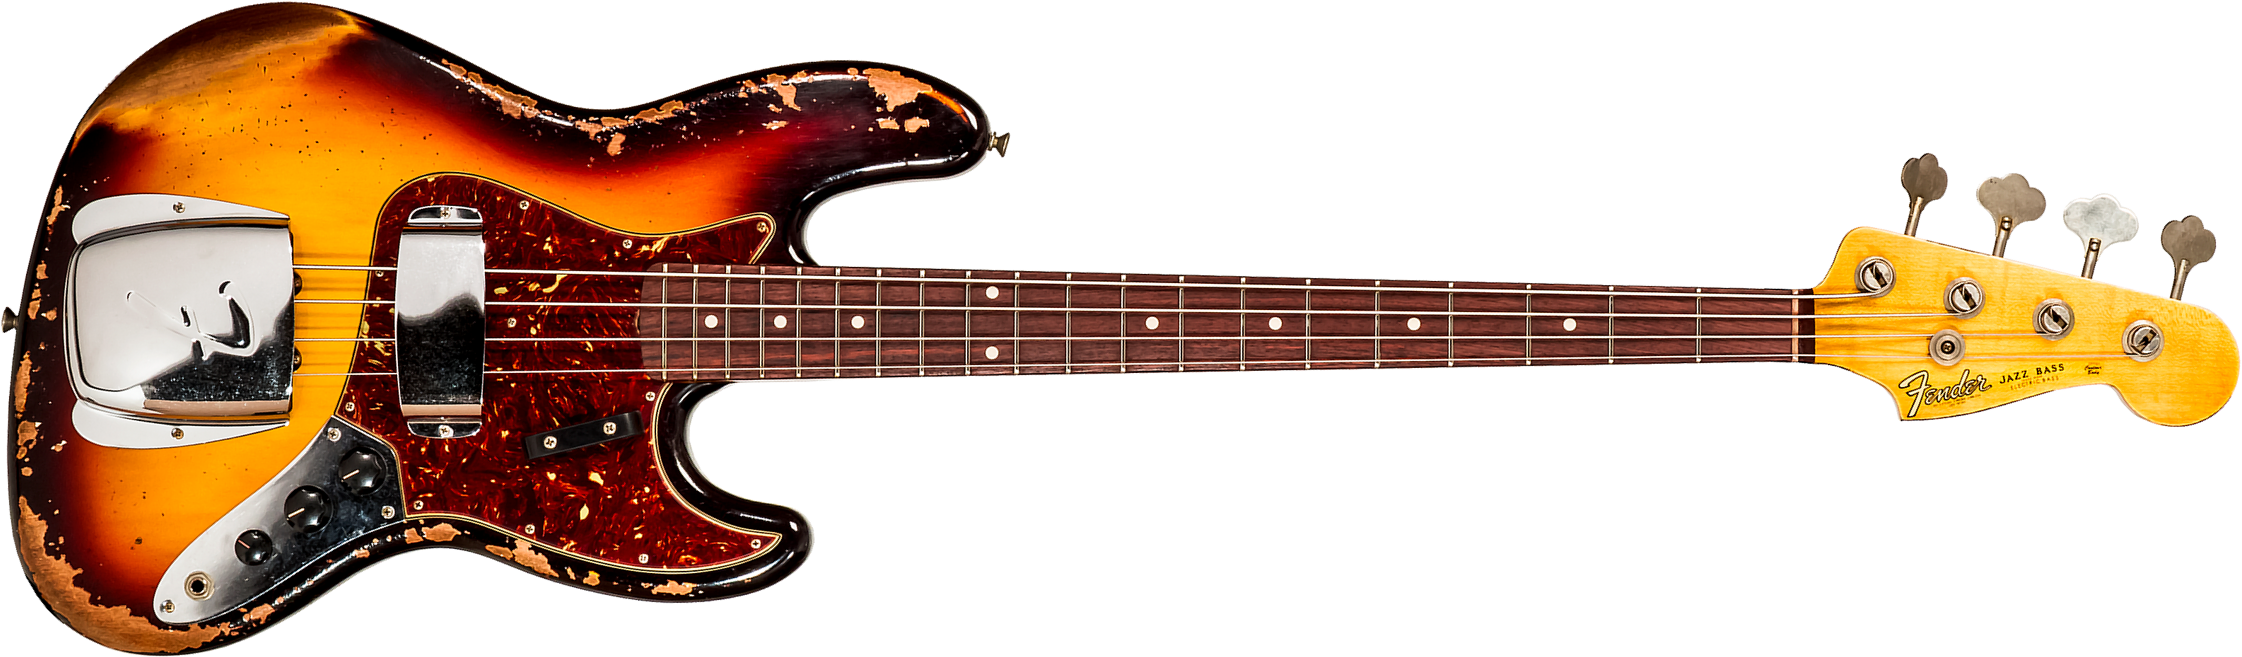 Fender Custom Shop Jazz Bass 1961 Rw #cz572155 - Heavy Relic 3-color Sunburst - Solidbody E-bass - Main picture